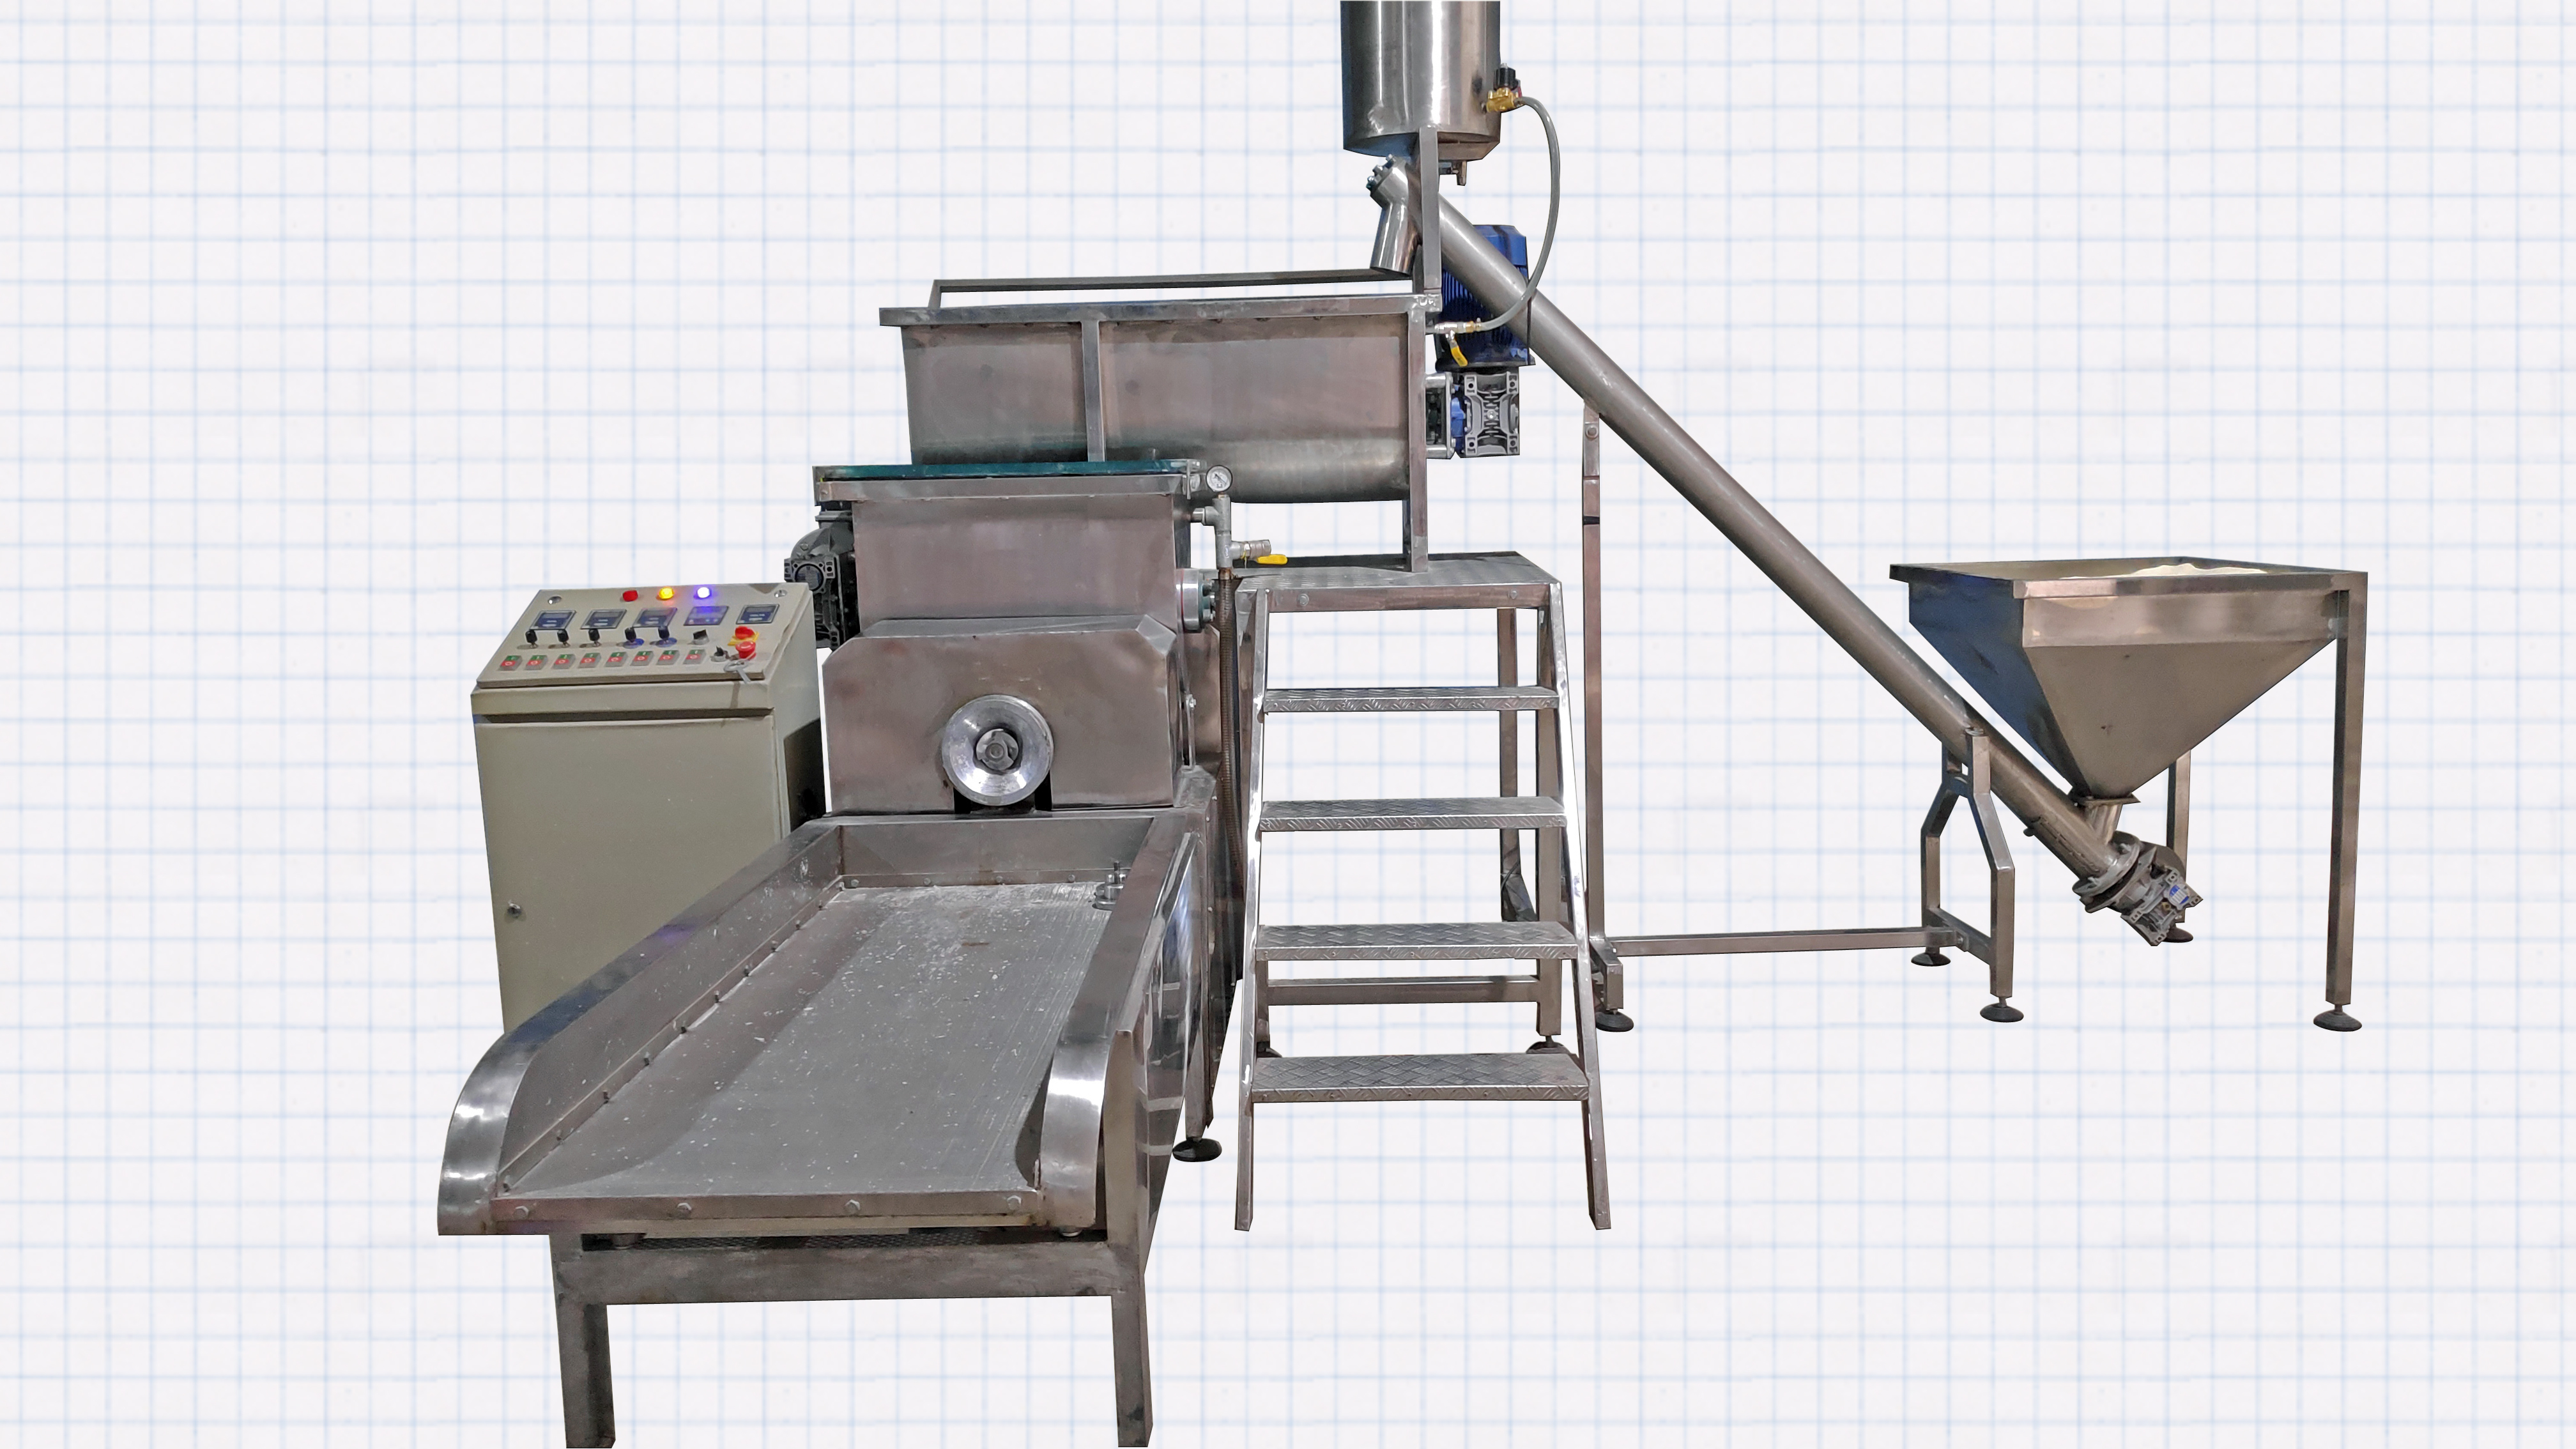 Automatic Pasta Extruder Machine 300 Kg/h